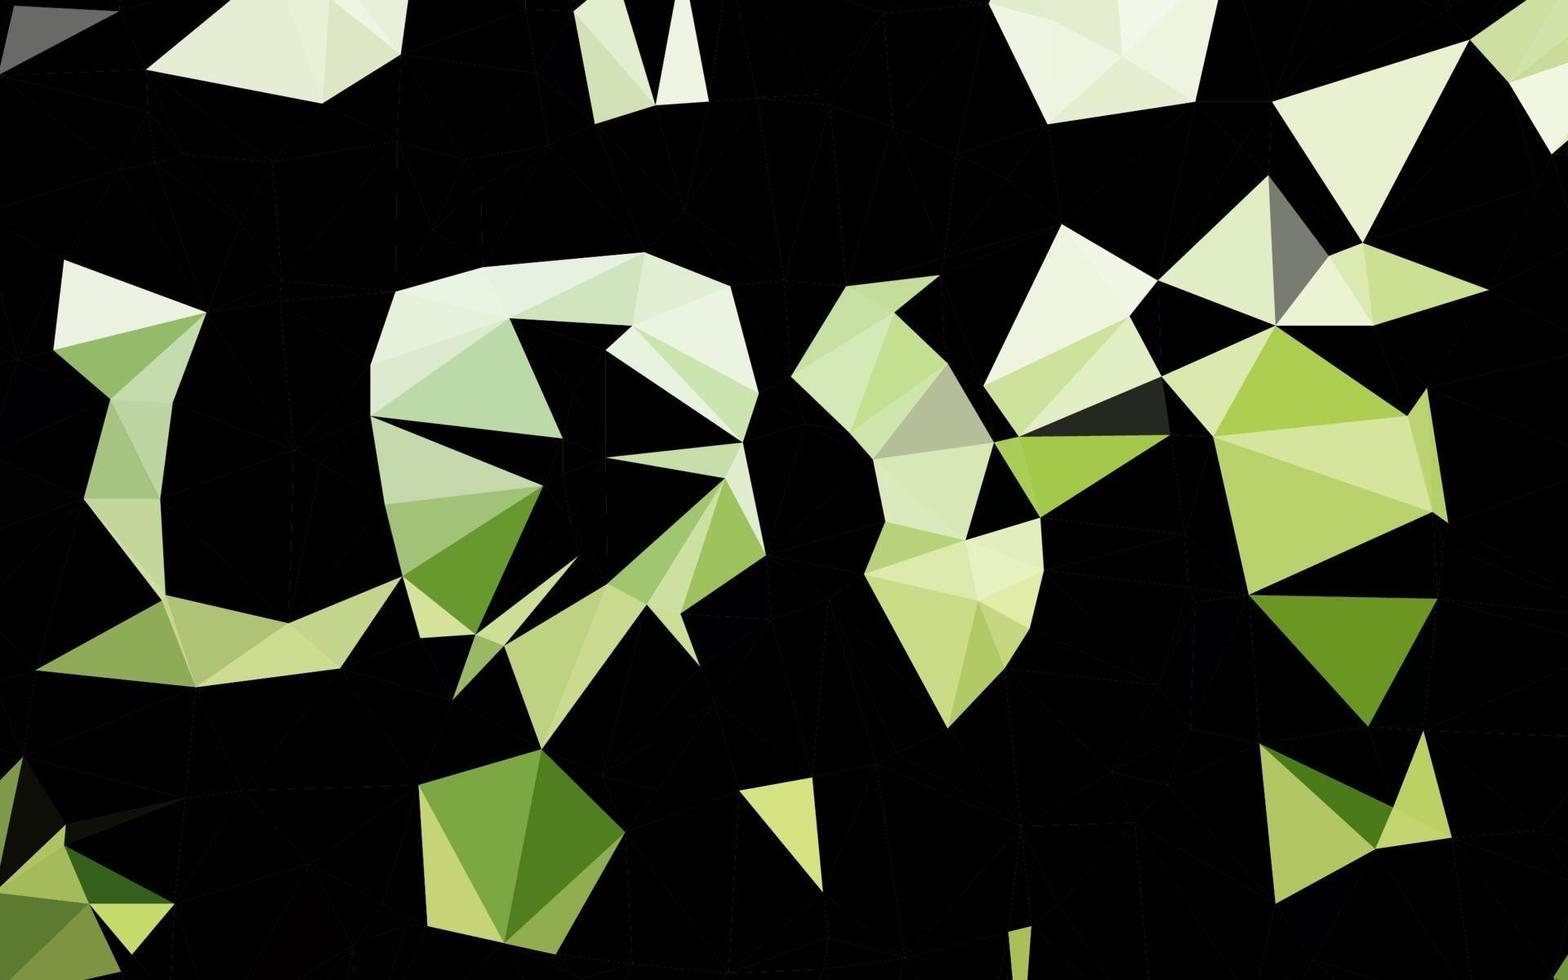 Dark Green vector polygonal template.